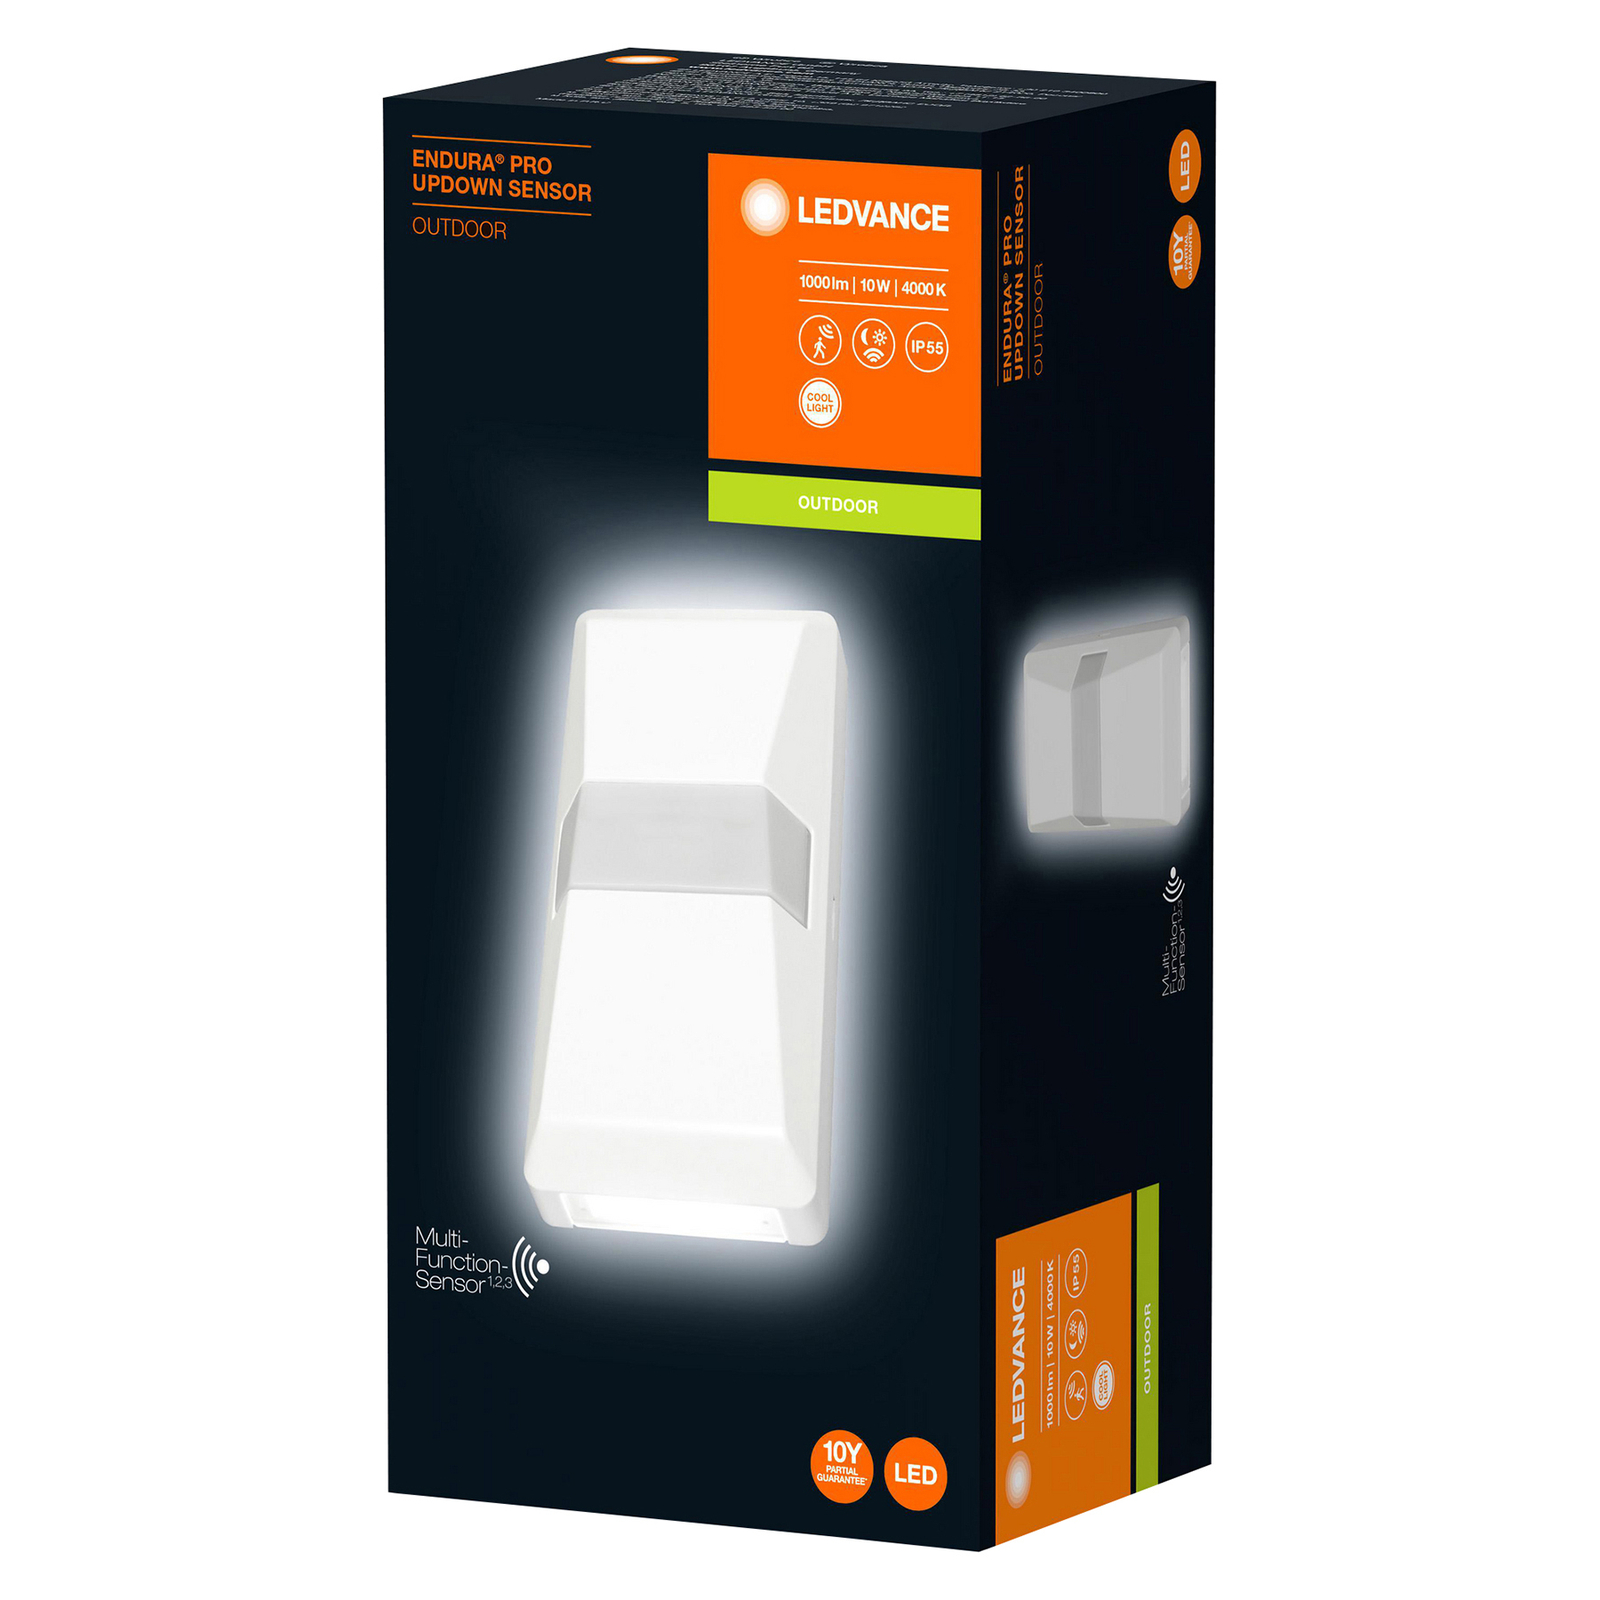 LEDVANCE Endura Pro UpDown senzor bijeli